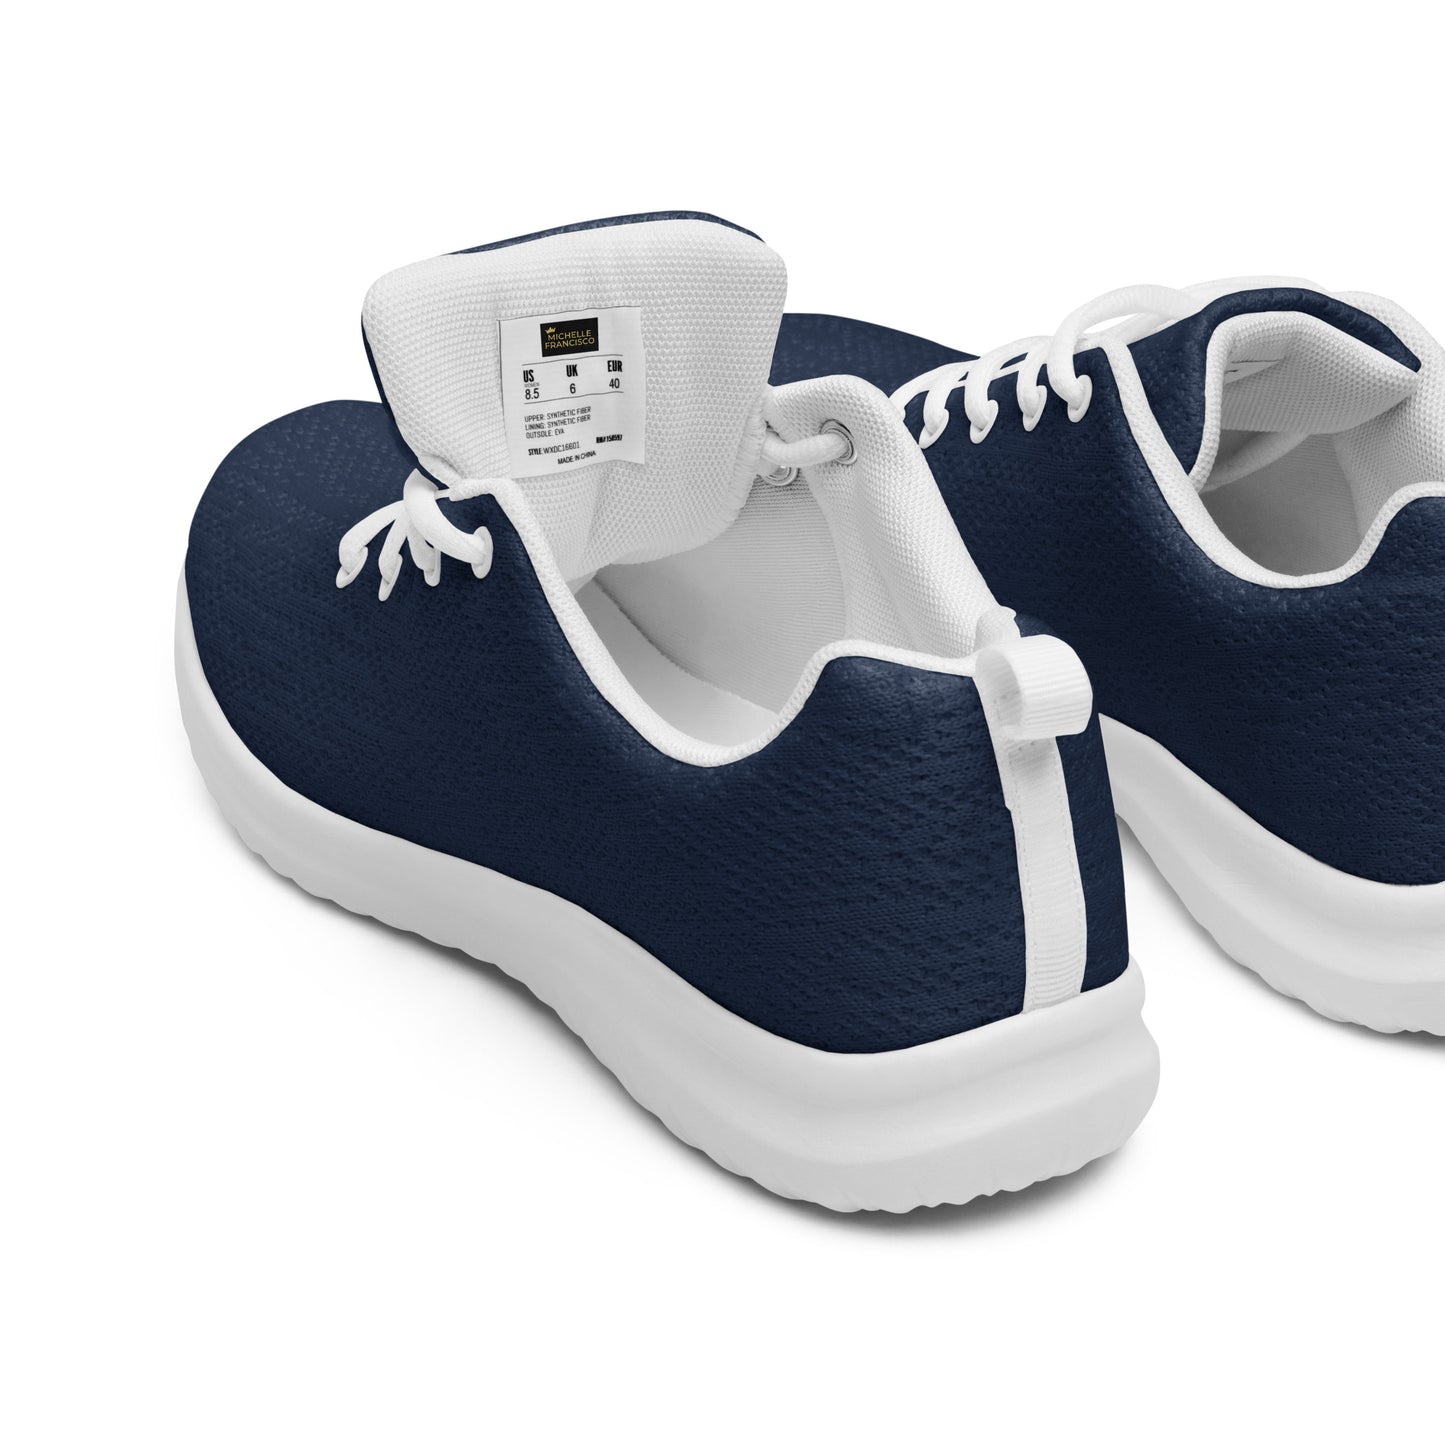 Men’s Navy Athletic Shoes